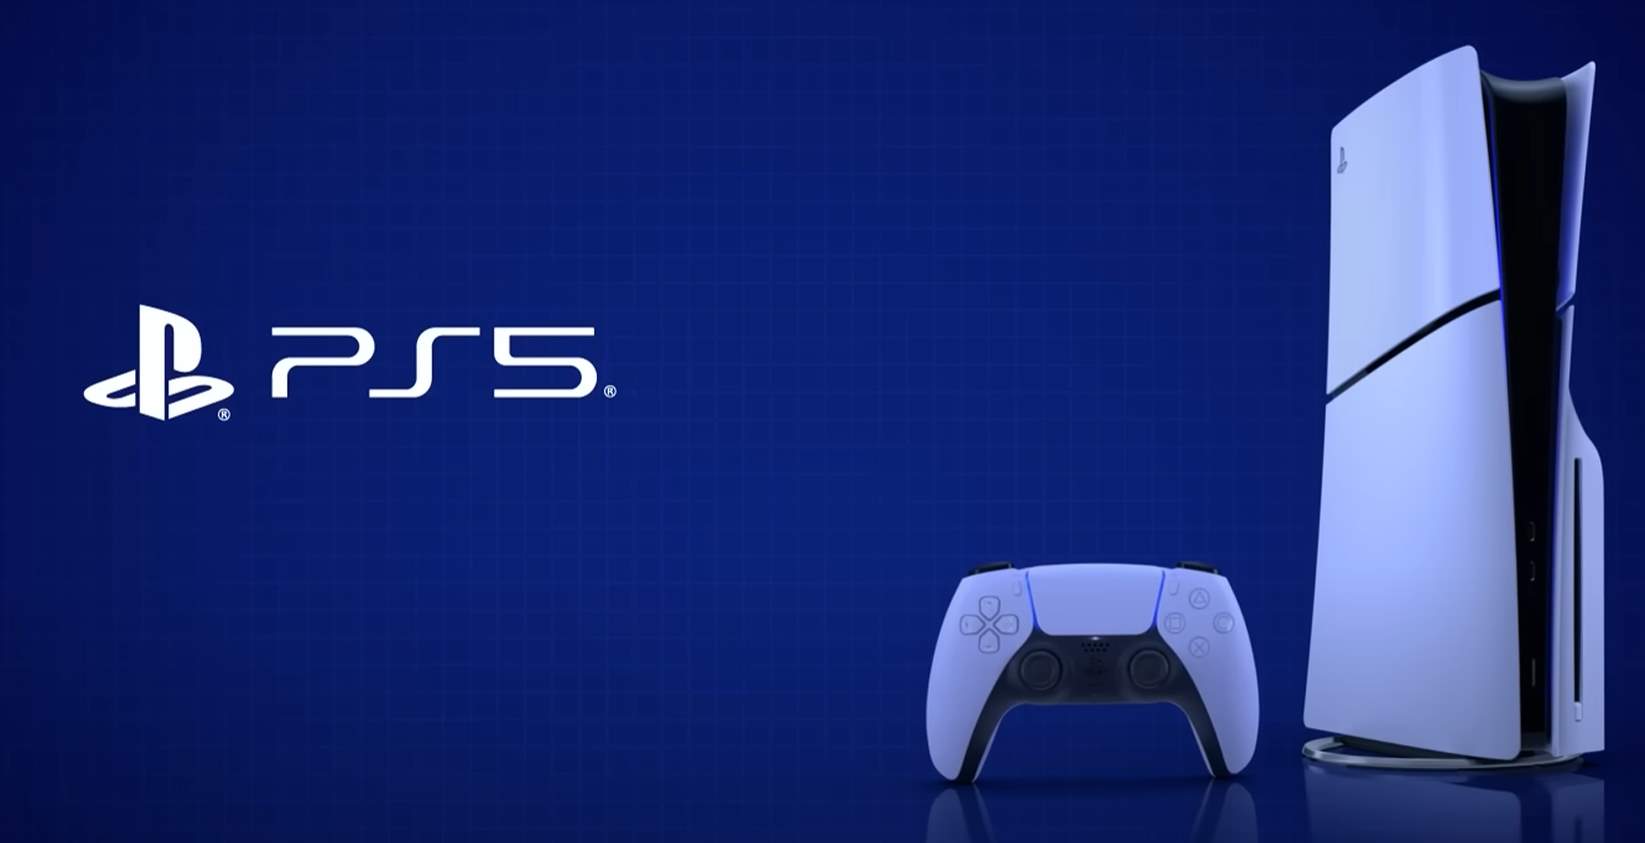 PS5 Slim - Official Trailer